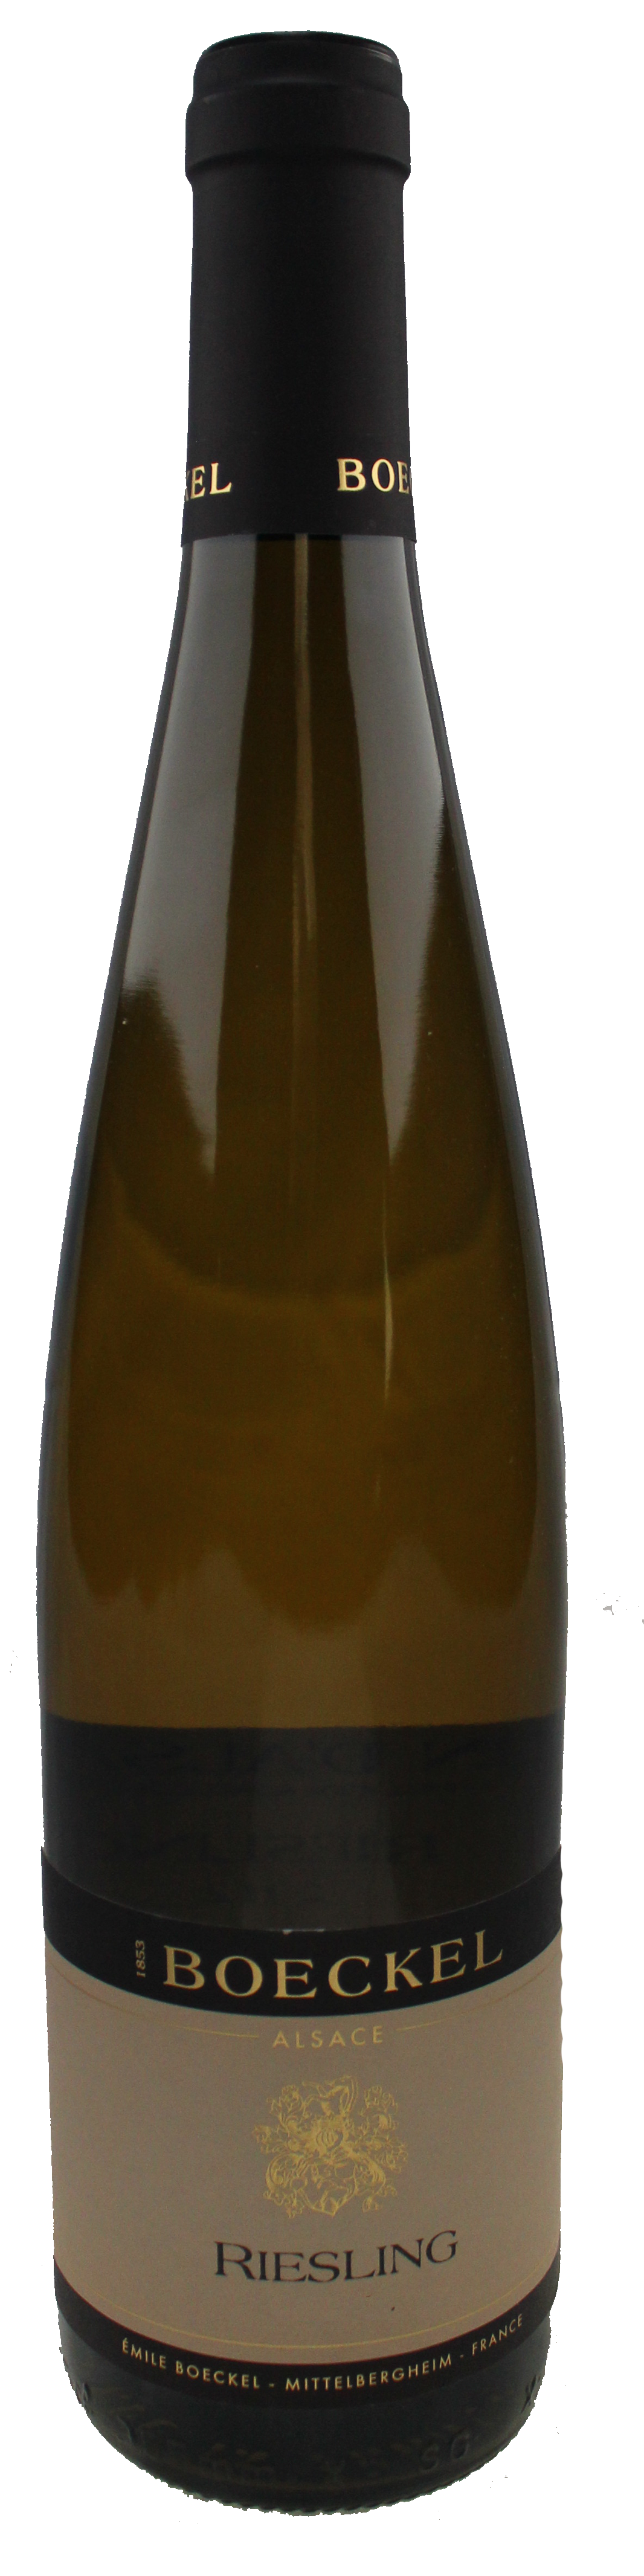 Bottle shot of 2013 Riesling